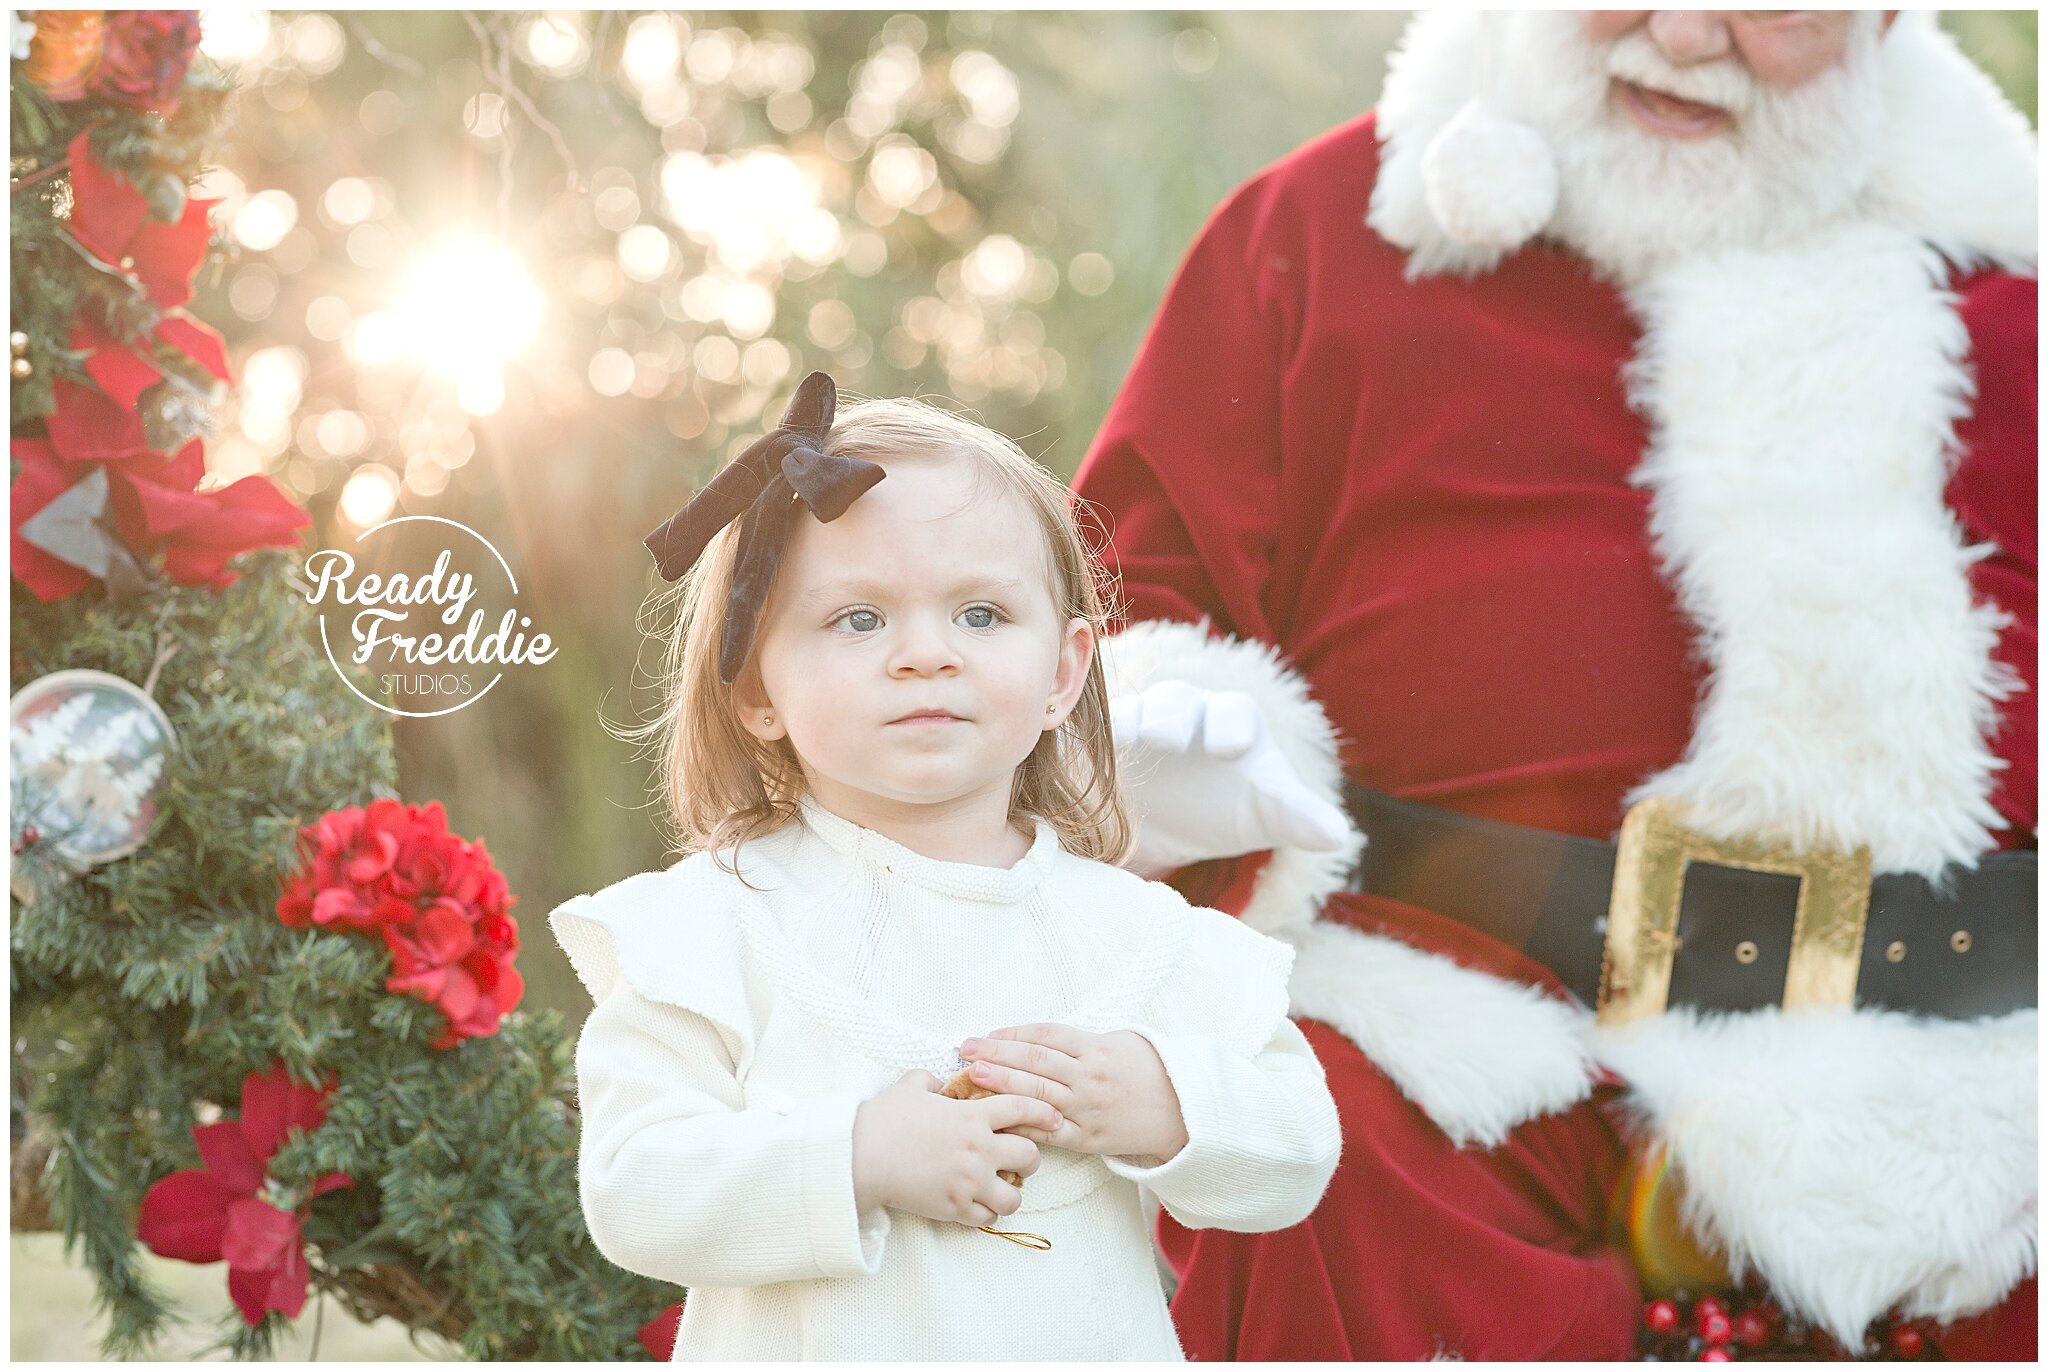 Beautiful outdoor holiday photo ideas  with Santa | Ready Freddie Studios Miami, FL